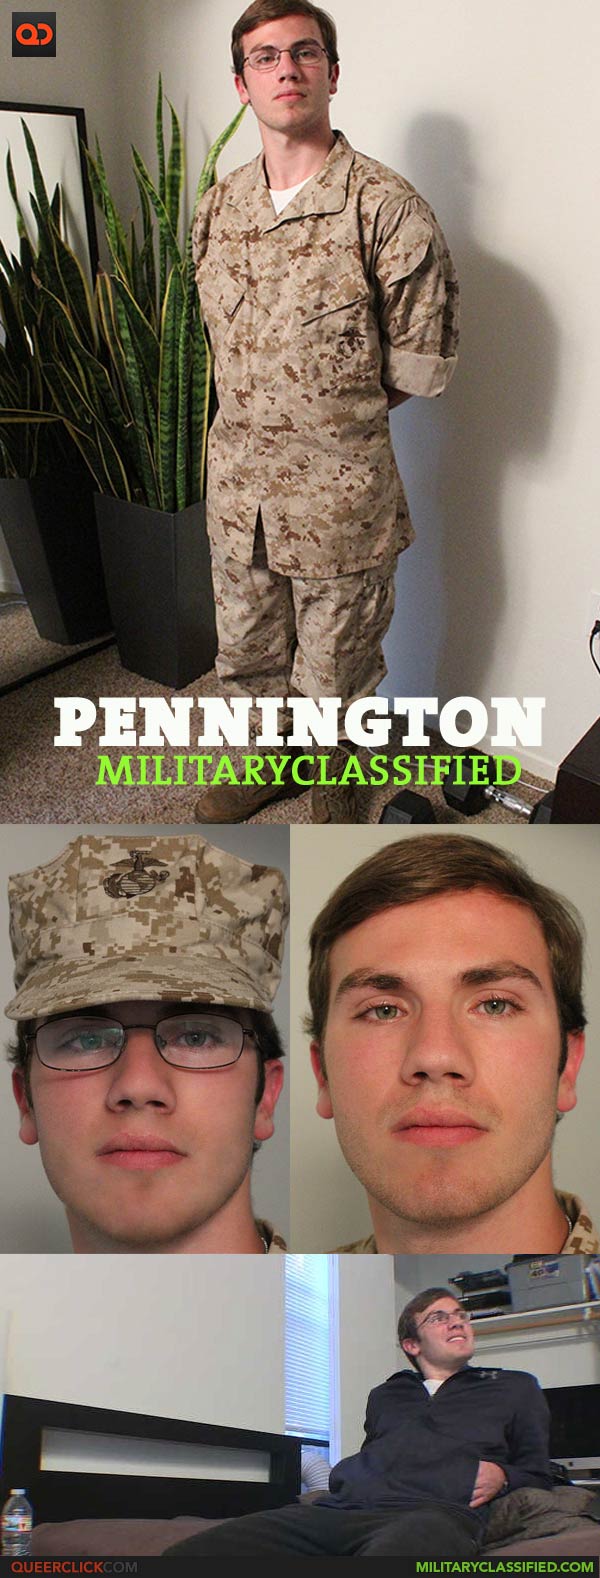 Military Classified: Pennington